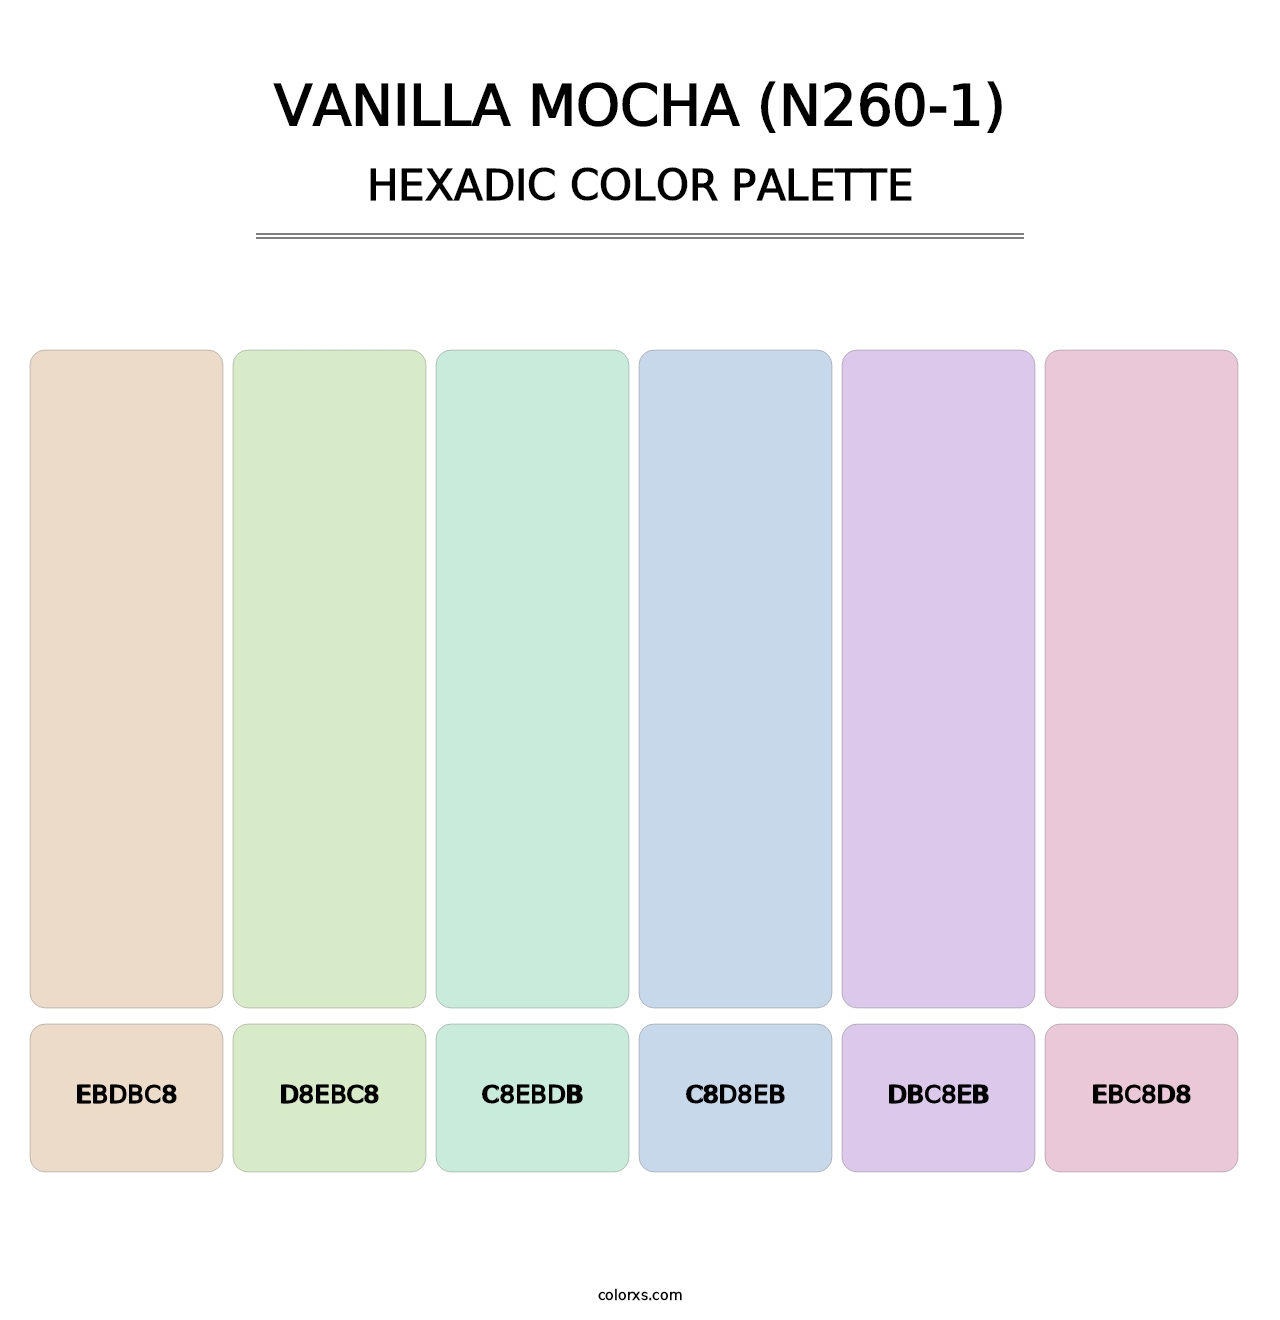 Vanilla Mocha (N260-1) - Hexadic Color Palette